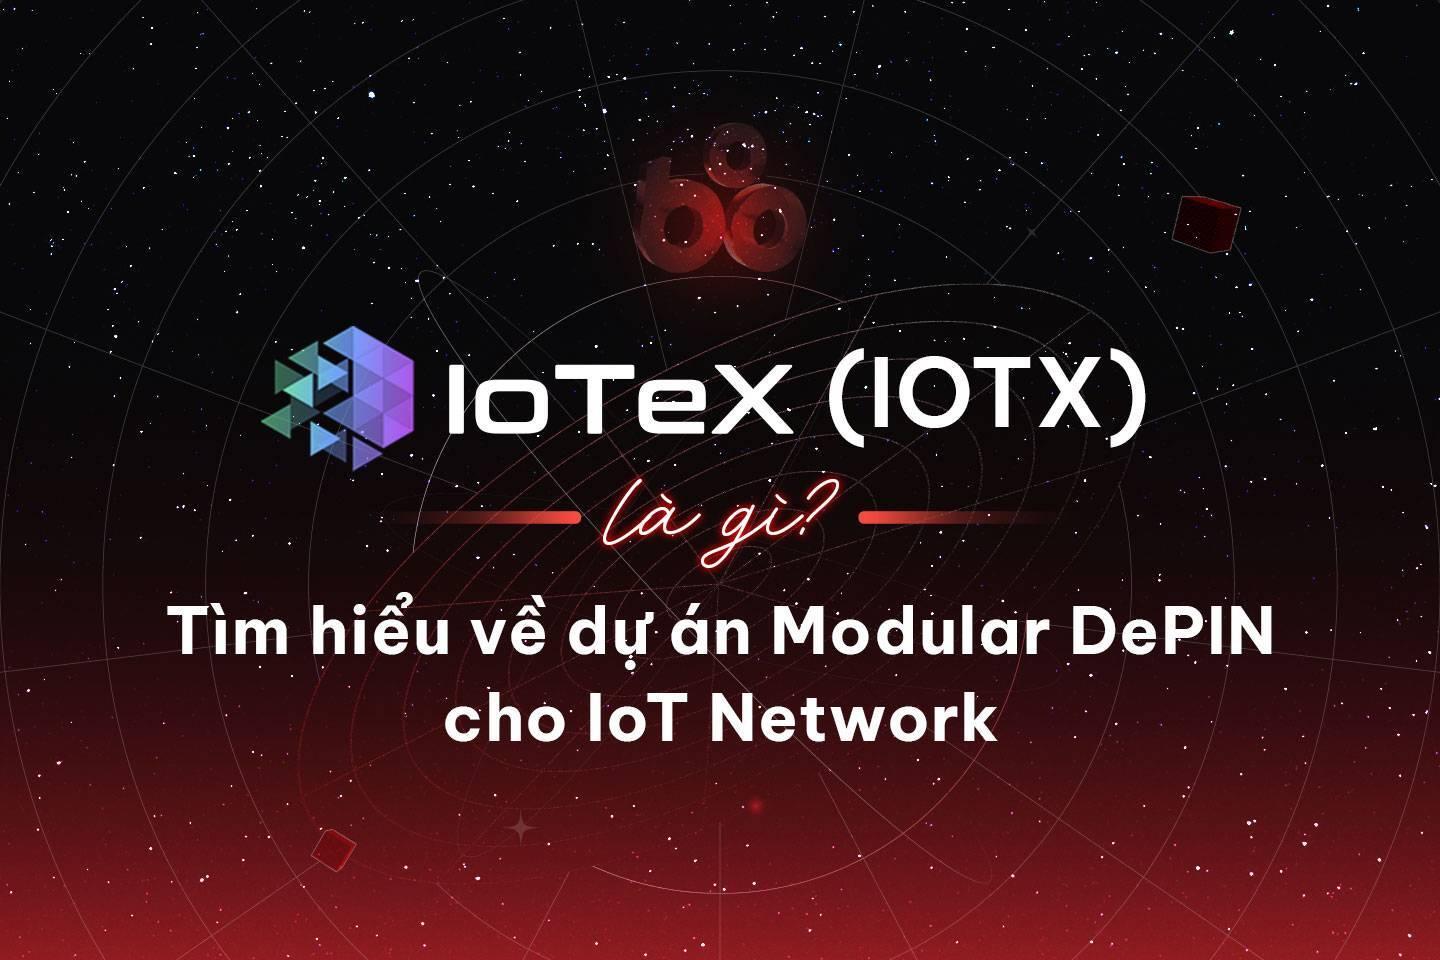 iotex-iotx-la-gi-tim-hieu-ve-du-an-modular-depin-cho-iot-network